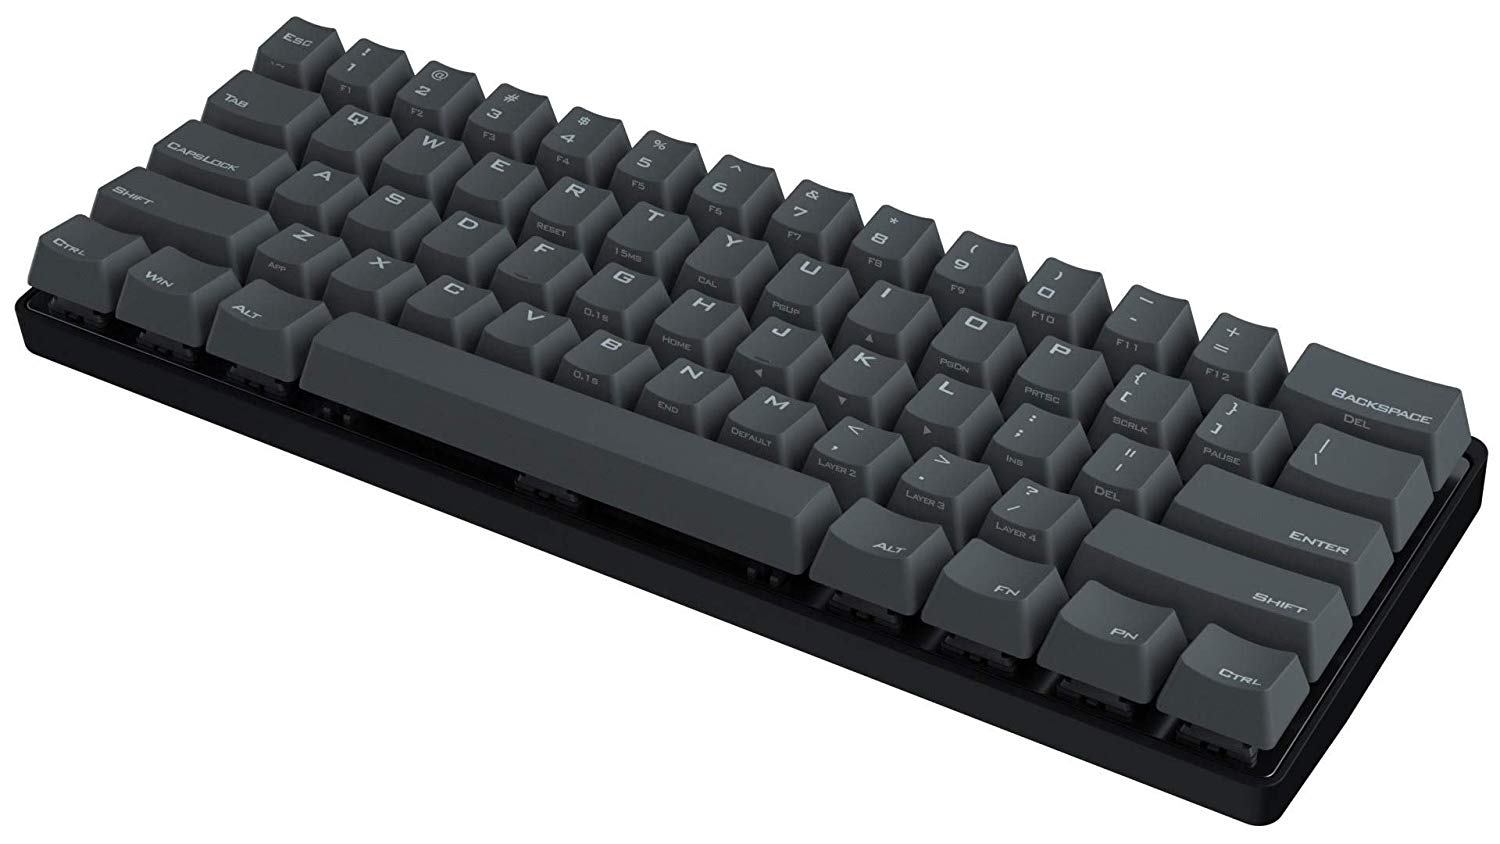 Кейкапы ardor gaming. Pok3r PBT Mechanical Keyboard Grey [MX Silver]. Vortex pok3r White (Speed Silver). Vortex pok3r Black. Клавиатура механическая g602.